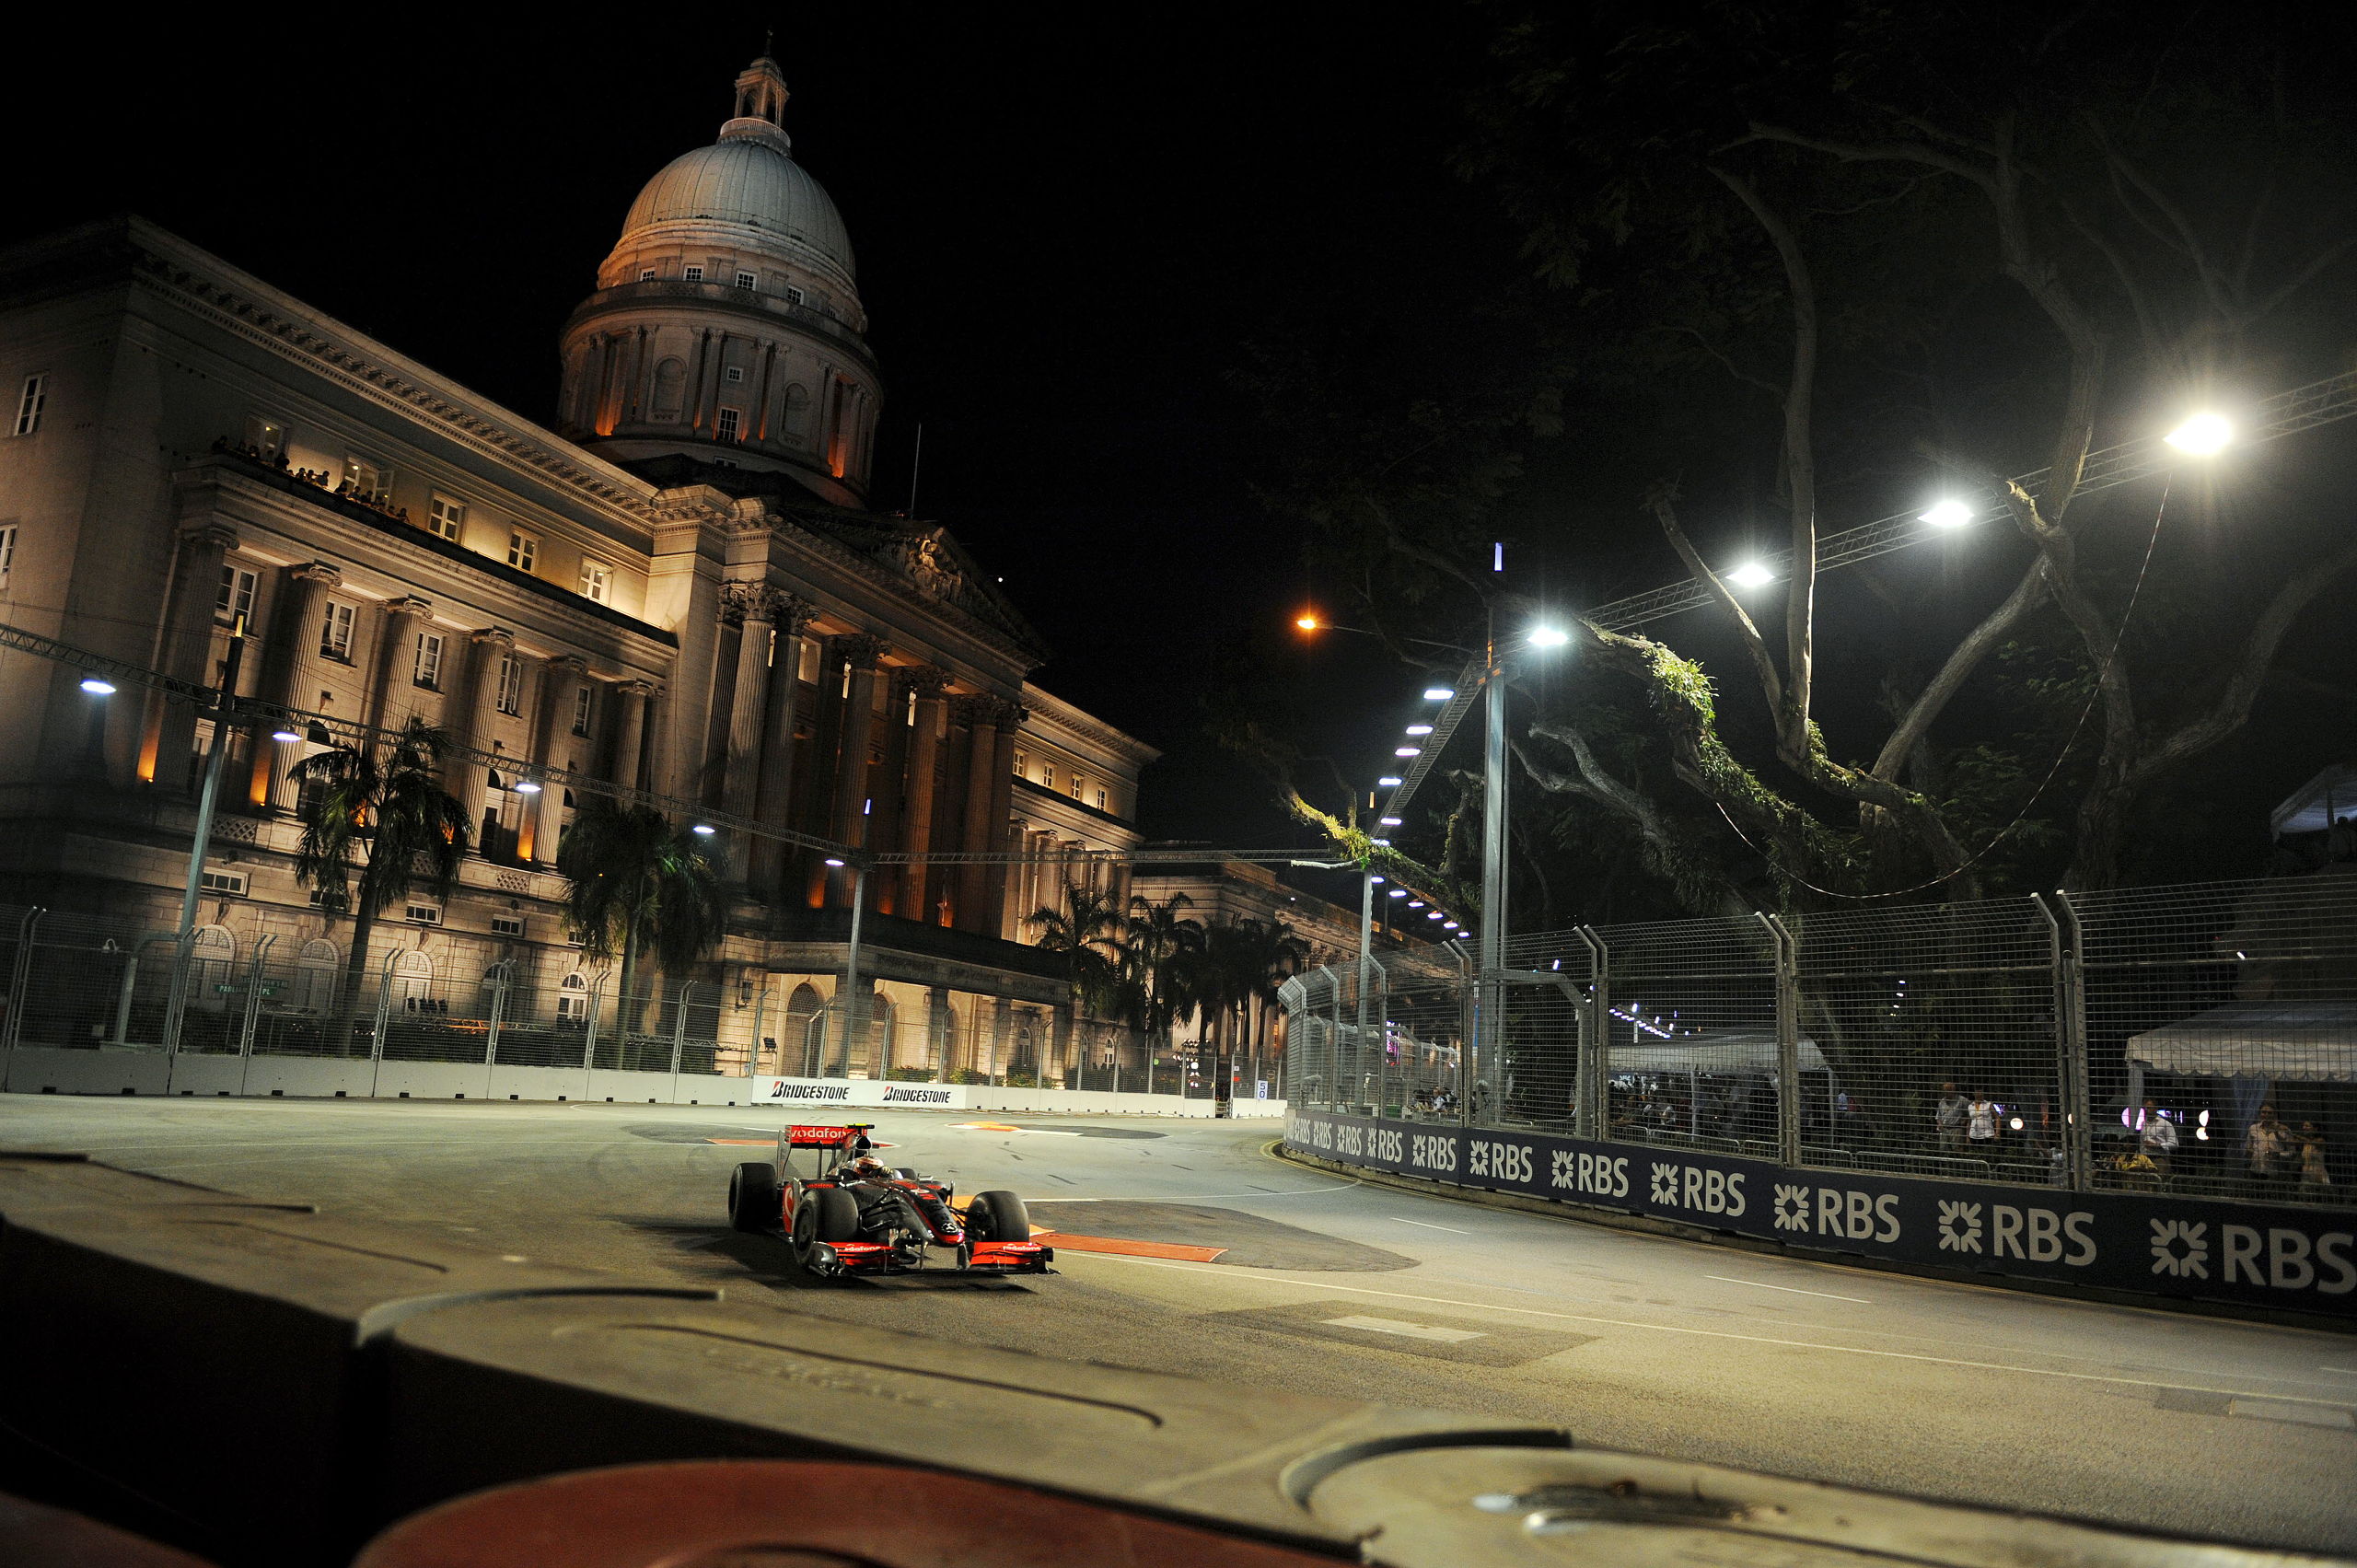 Grand Prix in Singapore 